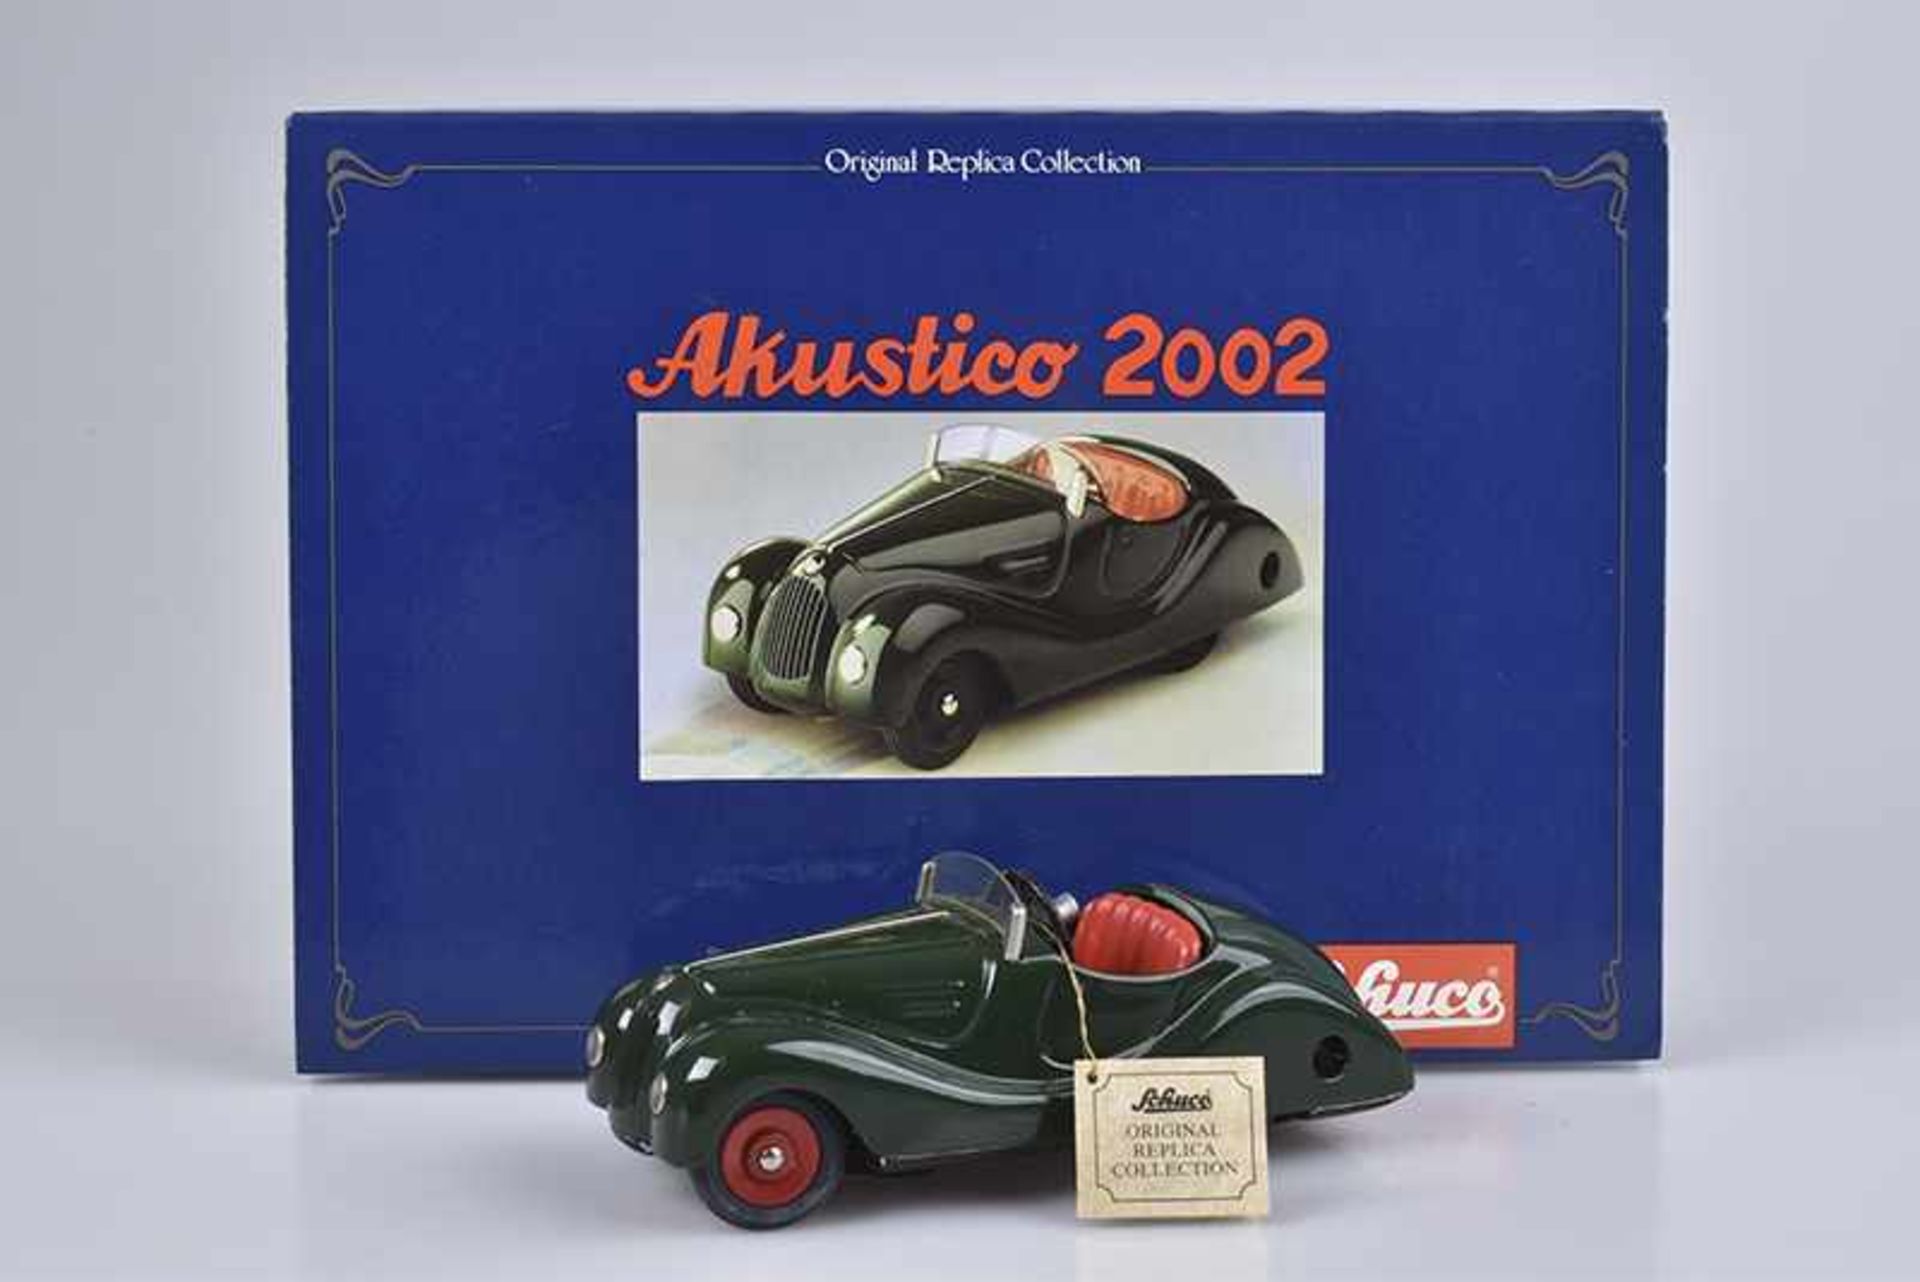 SCHUCO Akustico 2002, Replica Collection, Modell-Nr. 2462, BMW-Cabrio, Made in Western Germany,